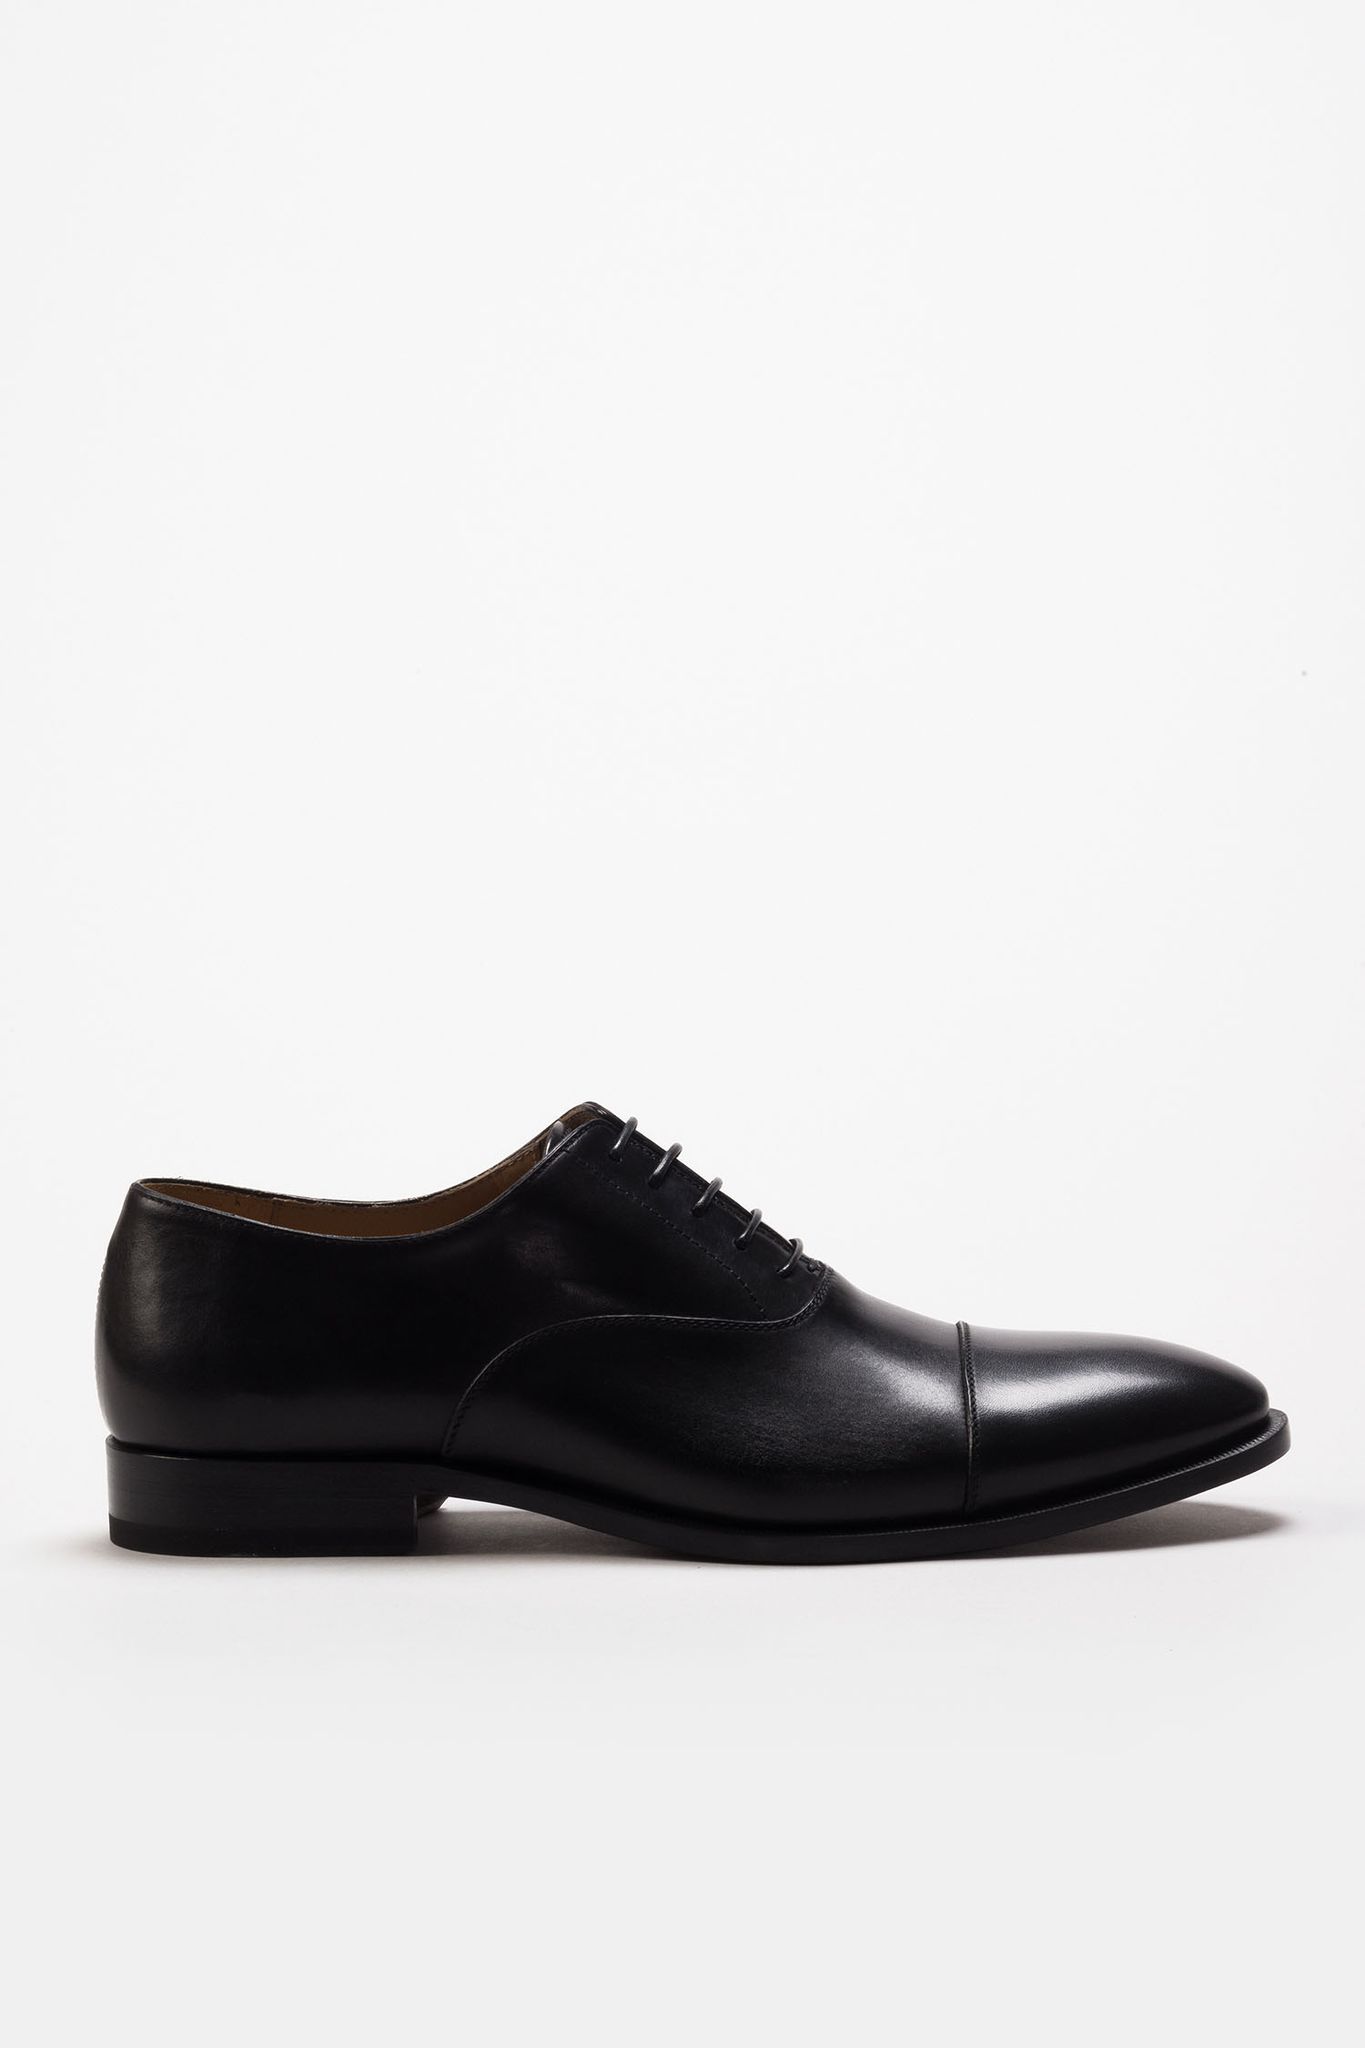 oscar-jacobson_plaza-shoes_black_92139166_310_list